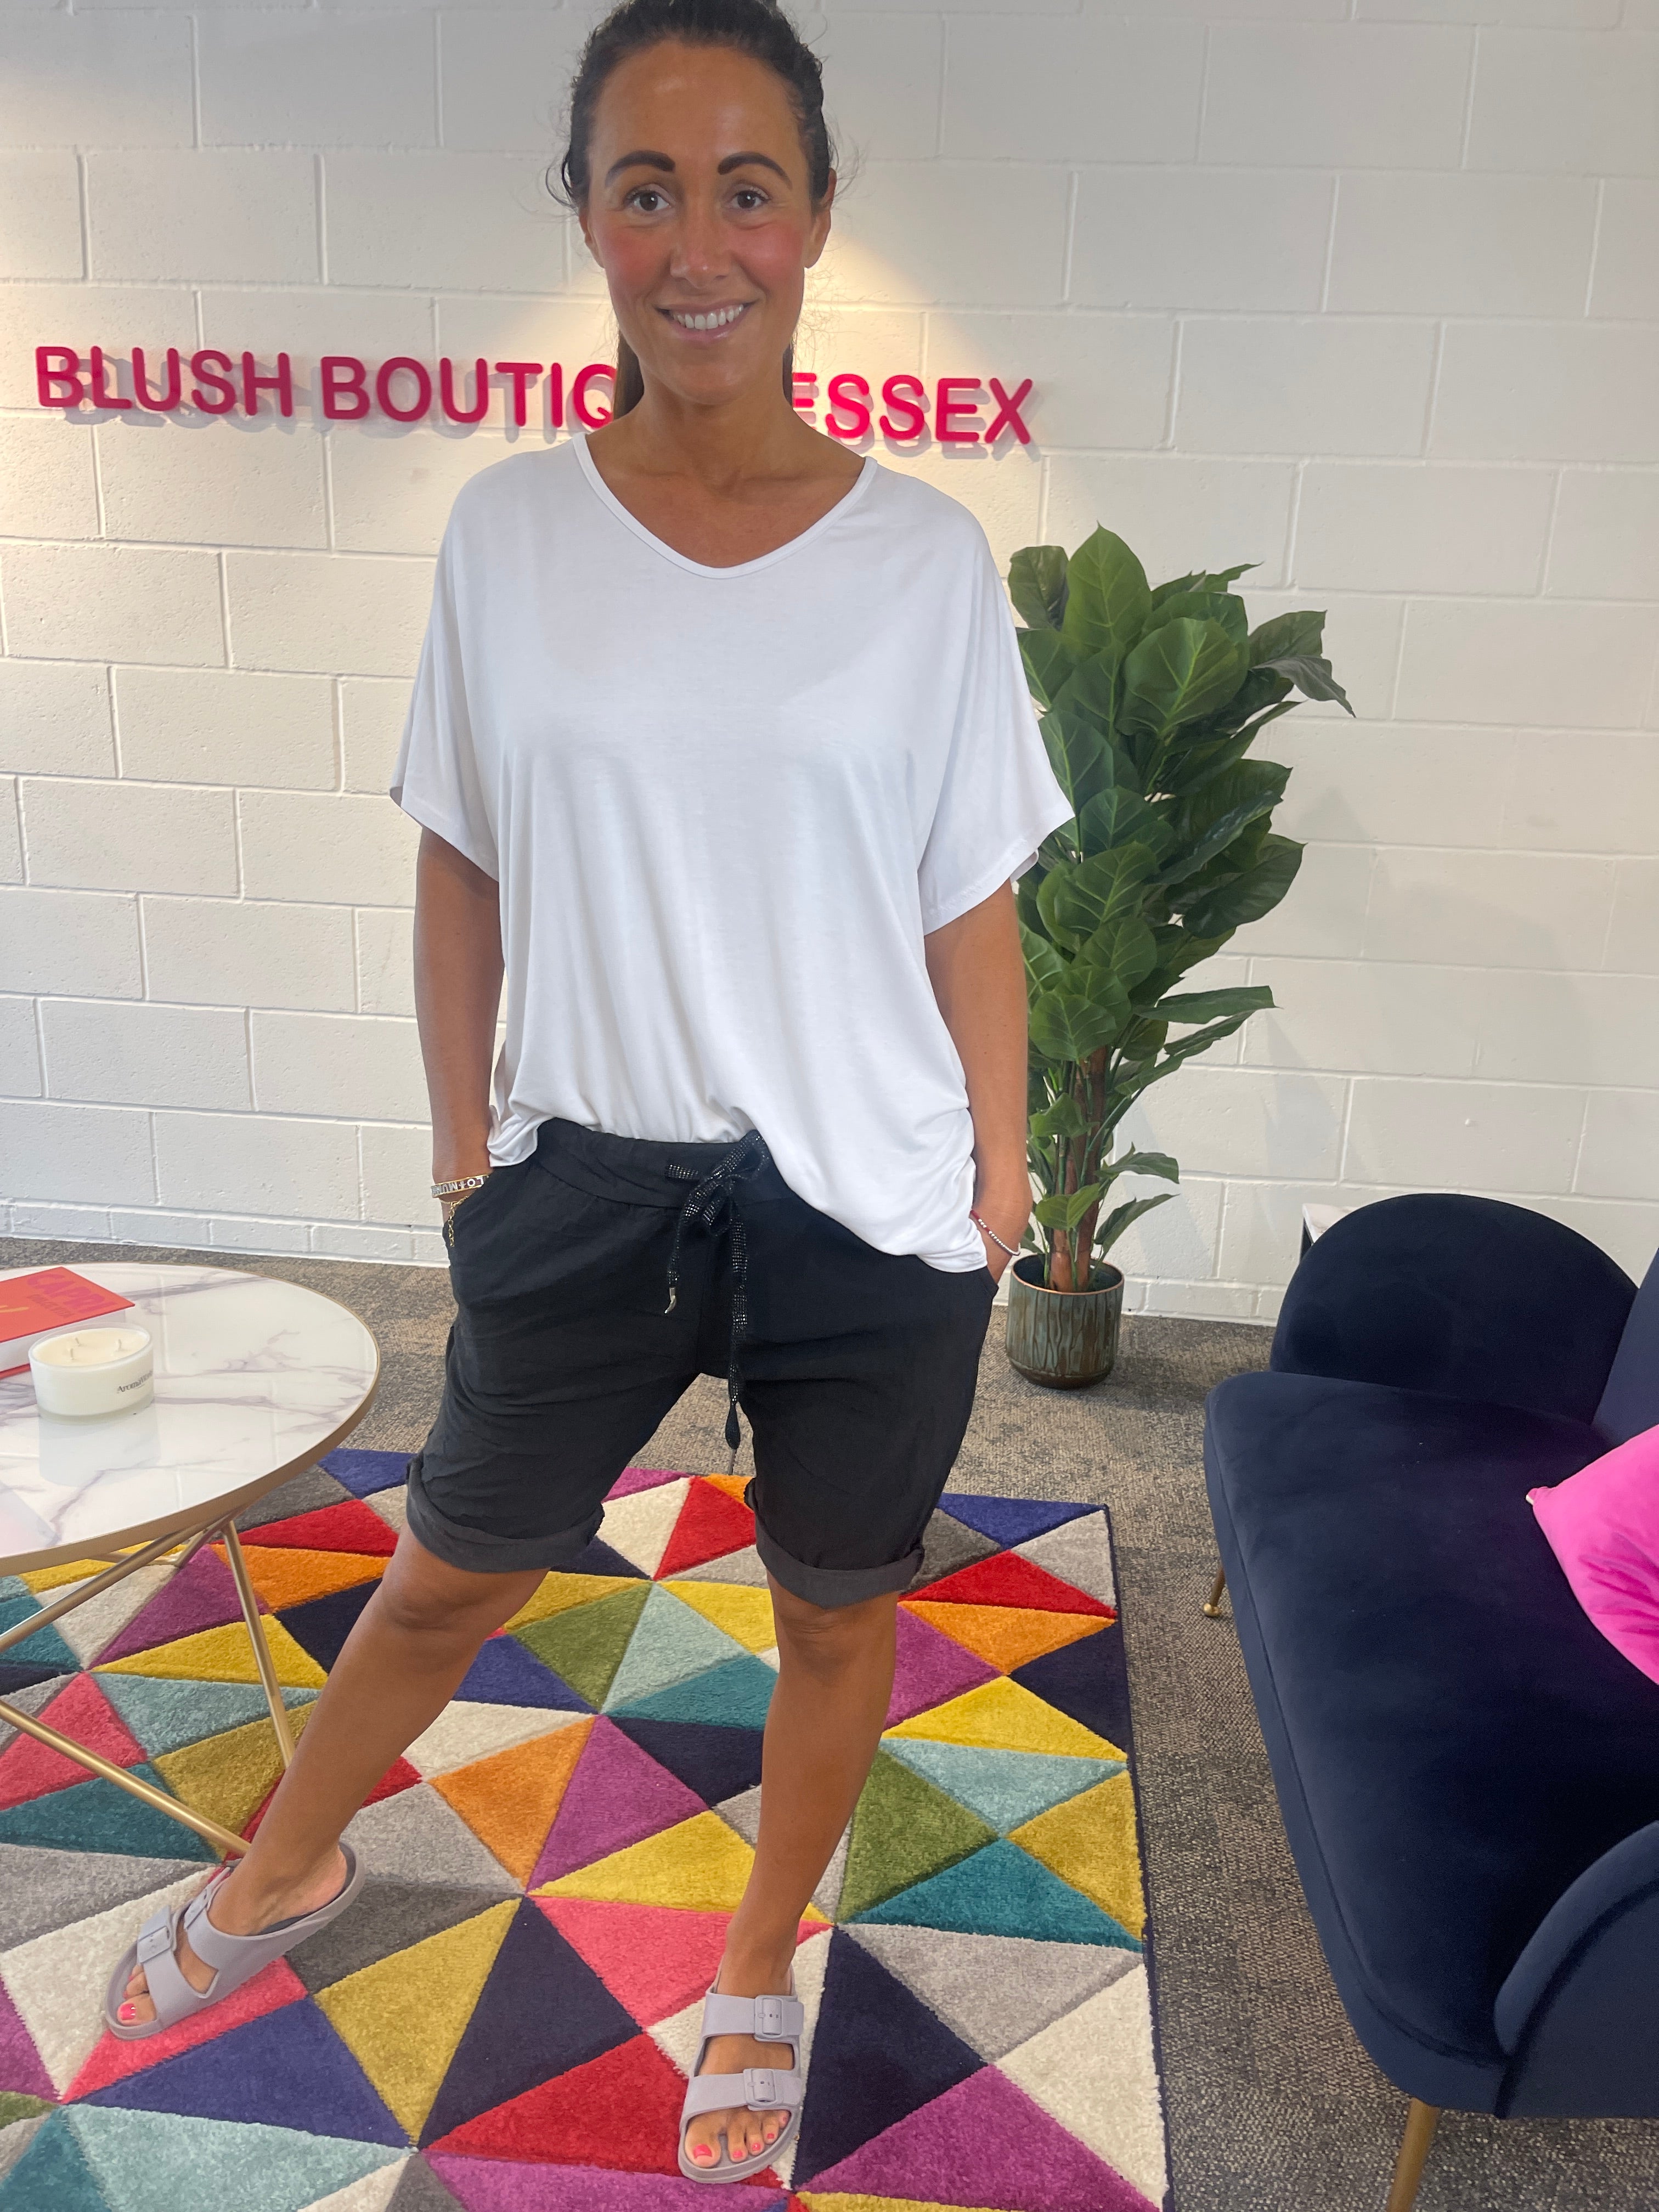 Magic Shorts - Blush Boutique Essex